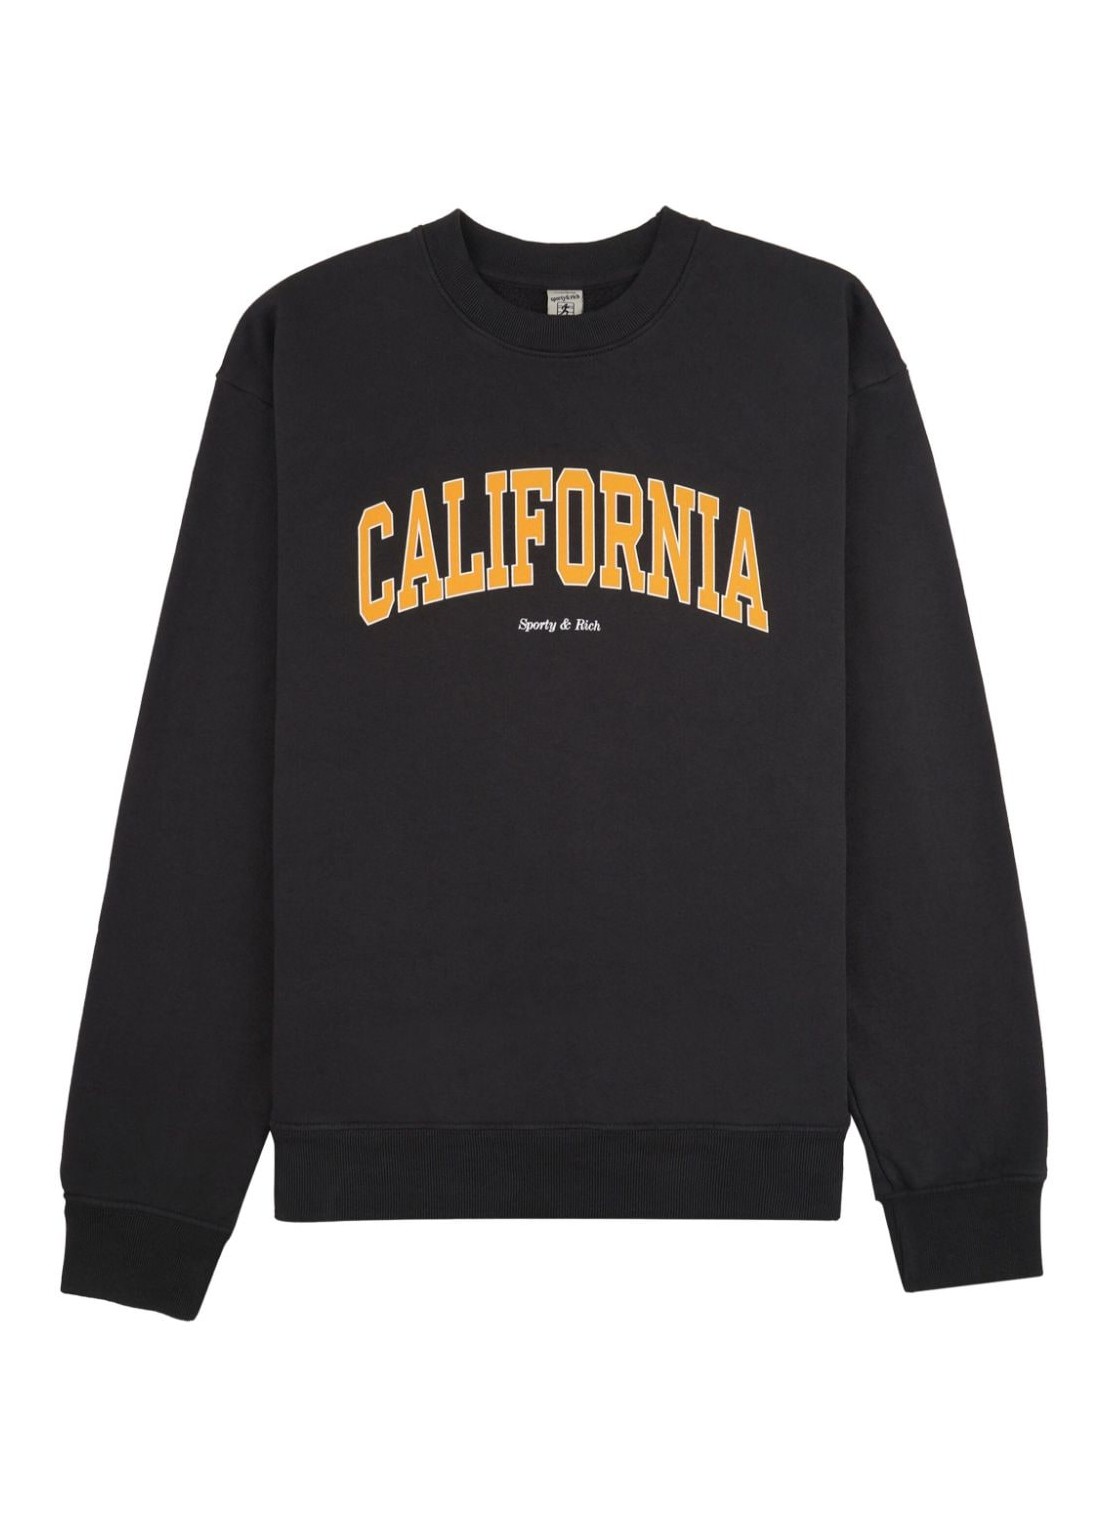 Sudadera sporty & rich sweater womancalifornia crewneck faded - ws067s405cf faded black talla M
 